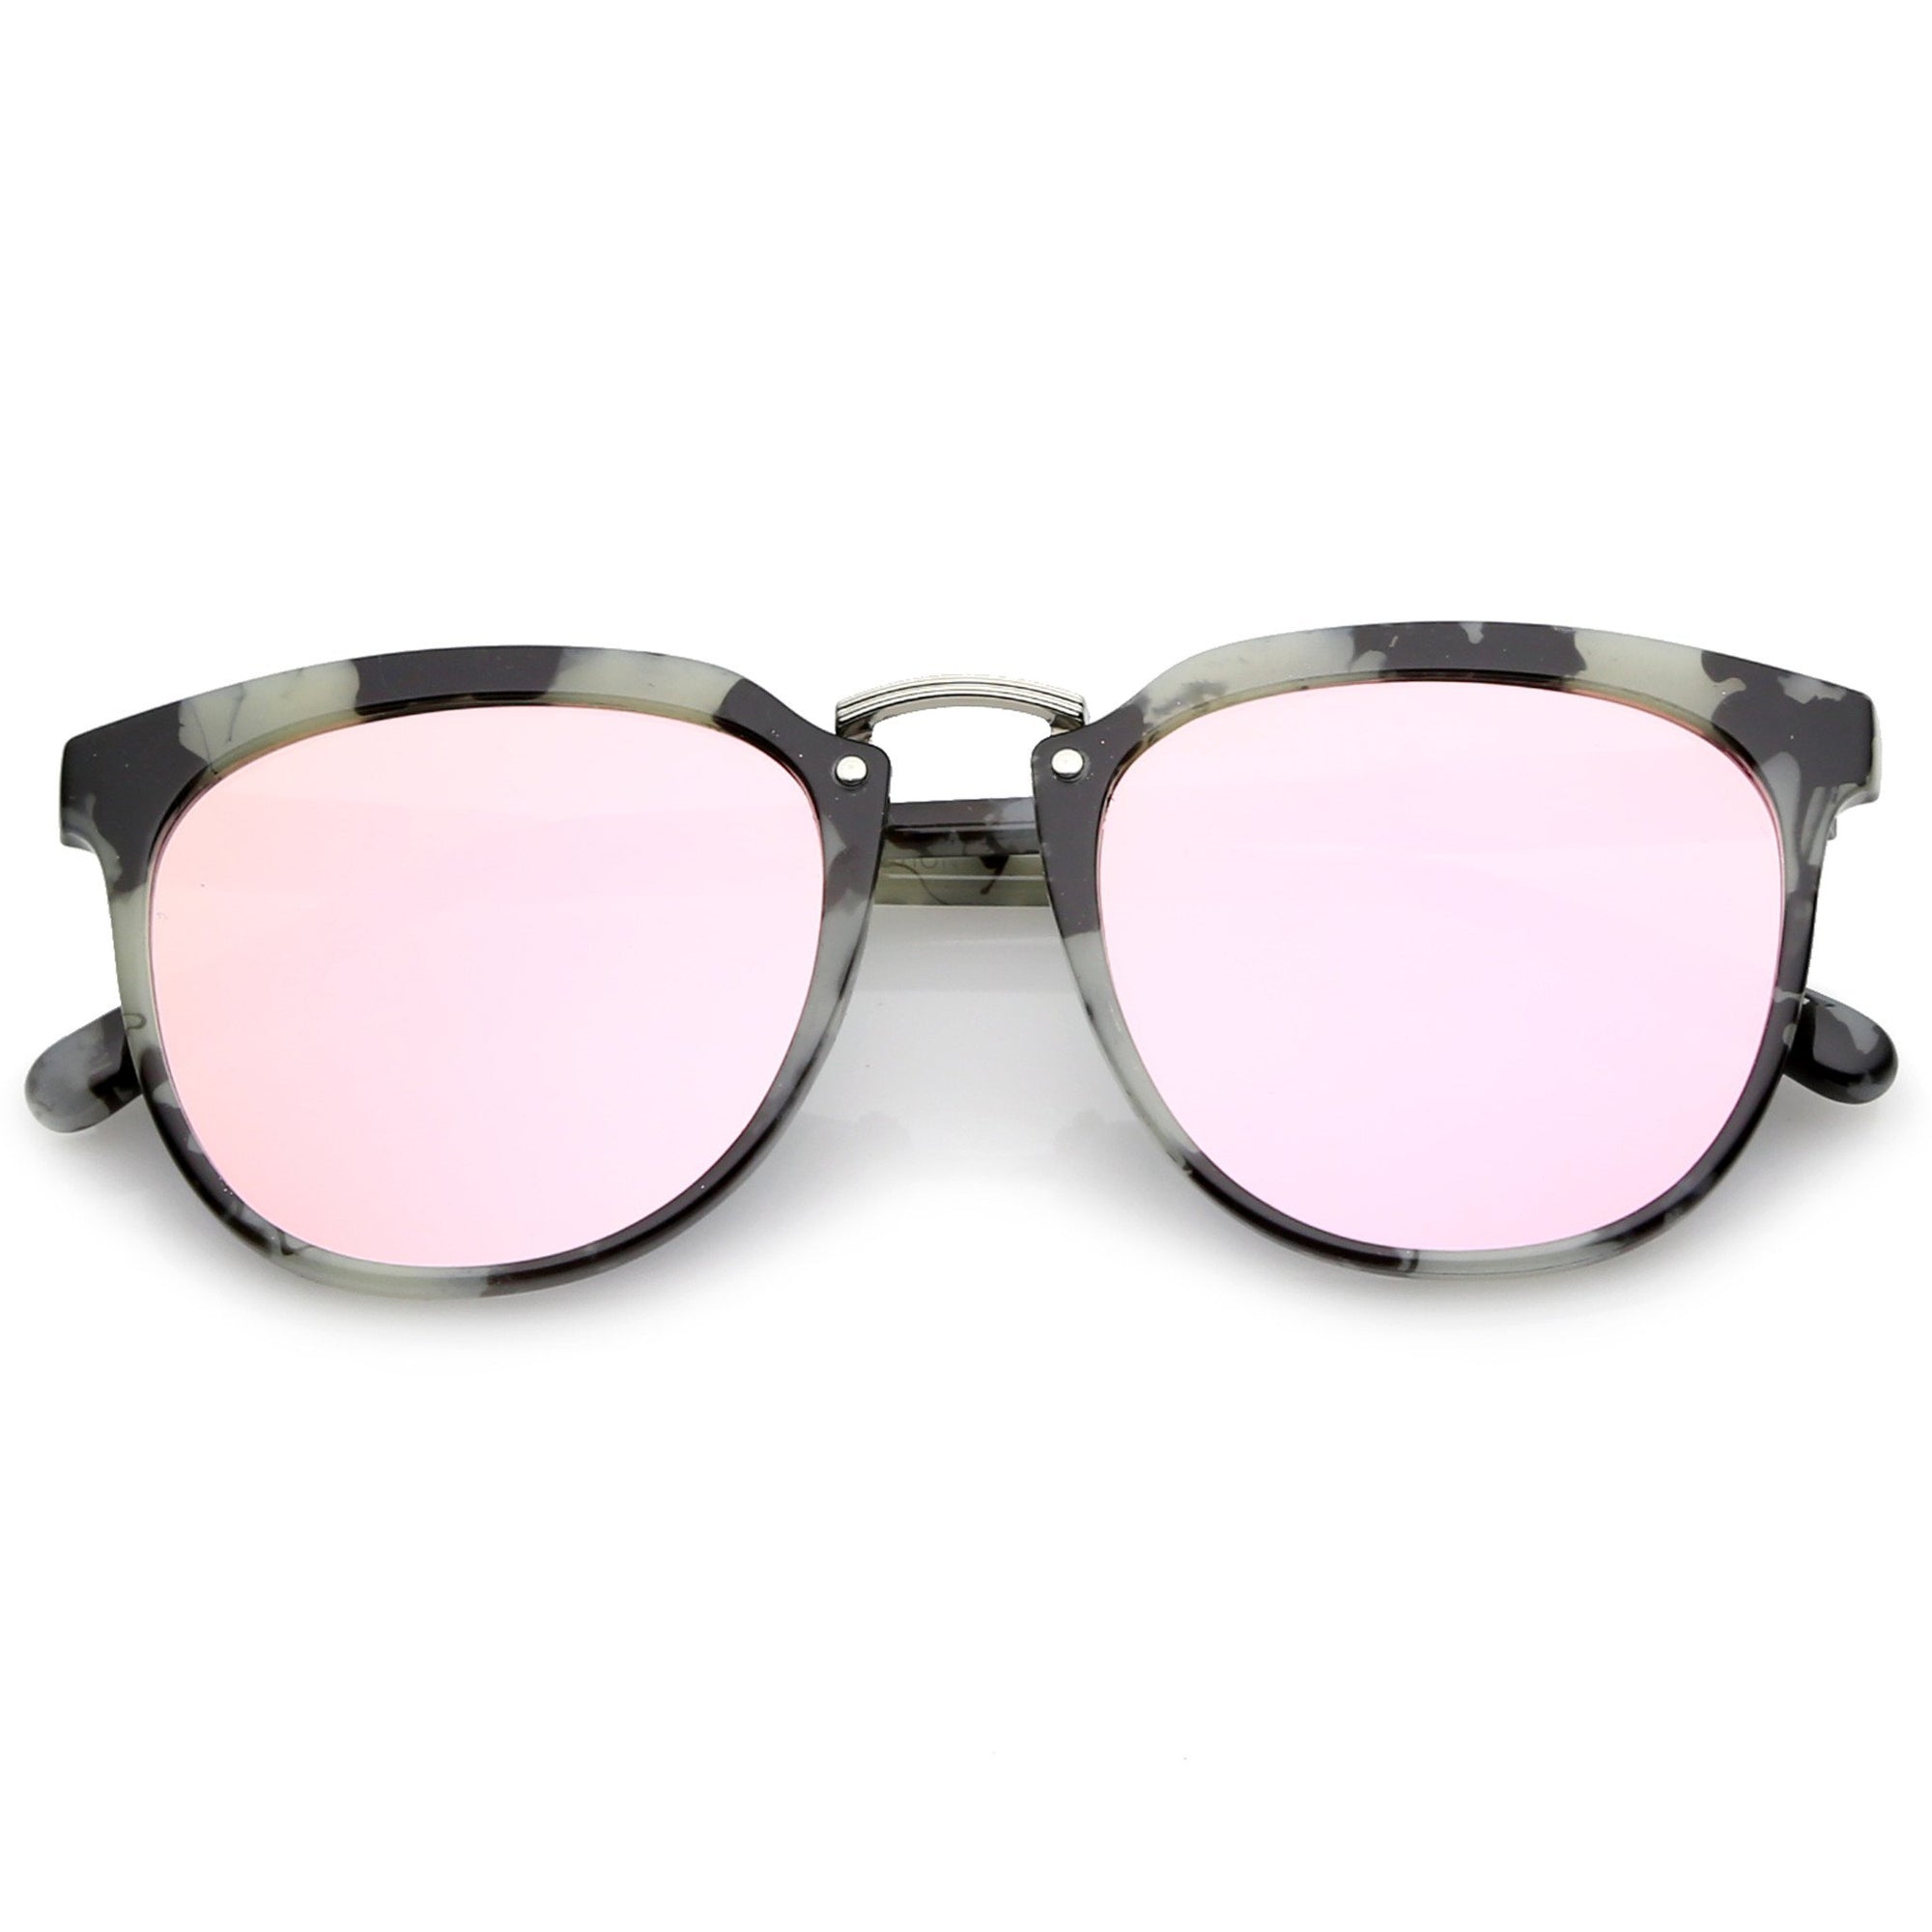 Gafas de sol con lentes planas espejadas modernas retro de tendencia A945